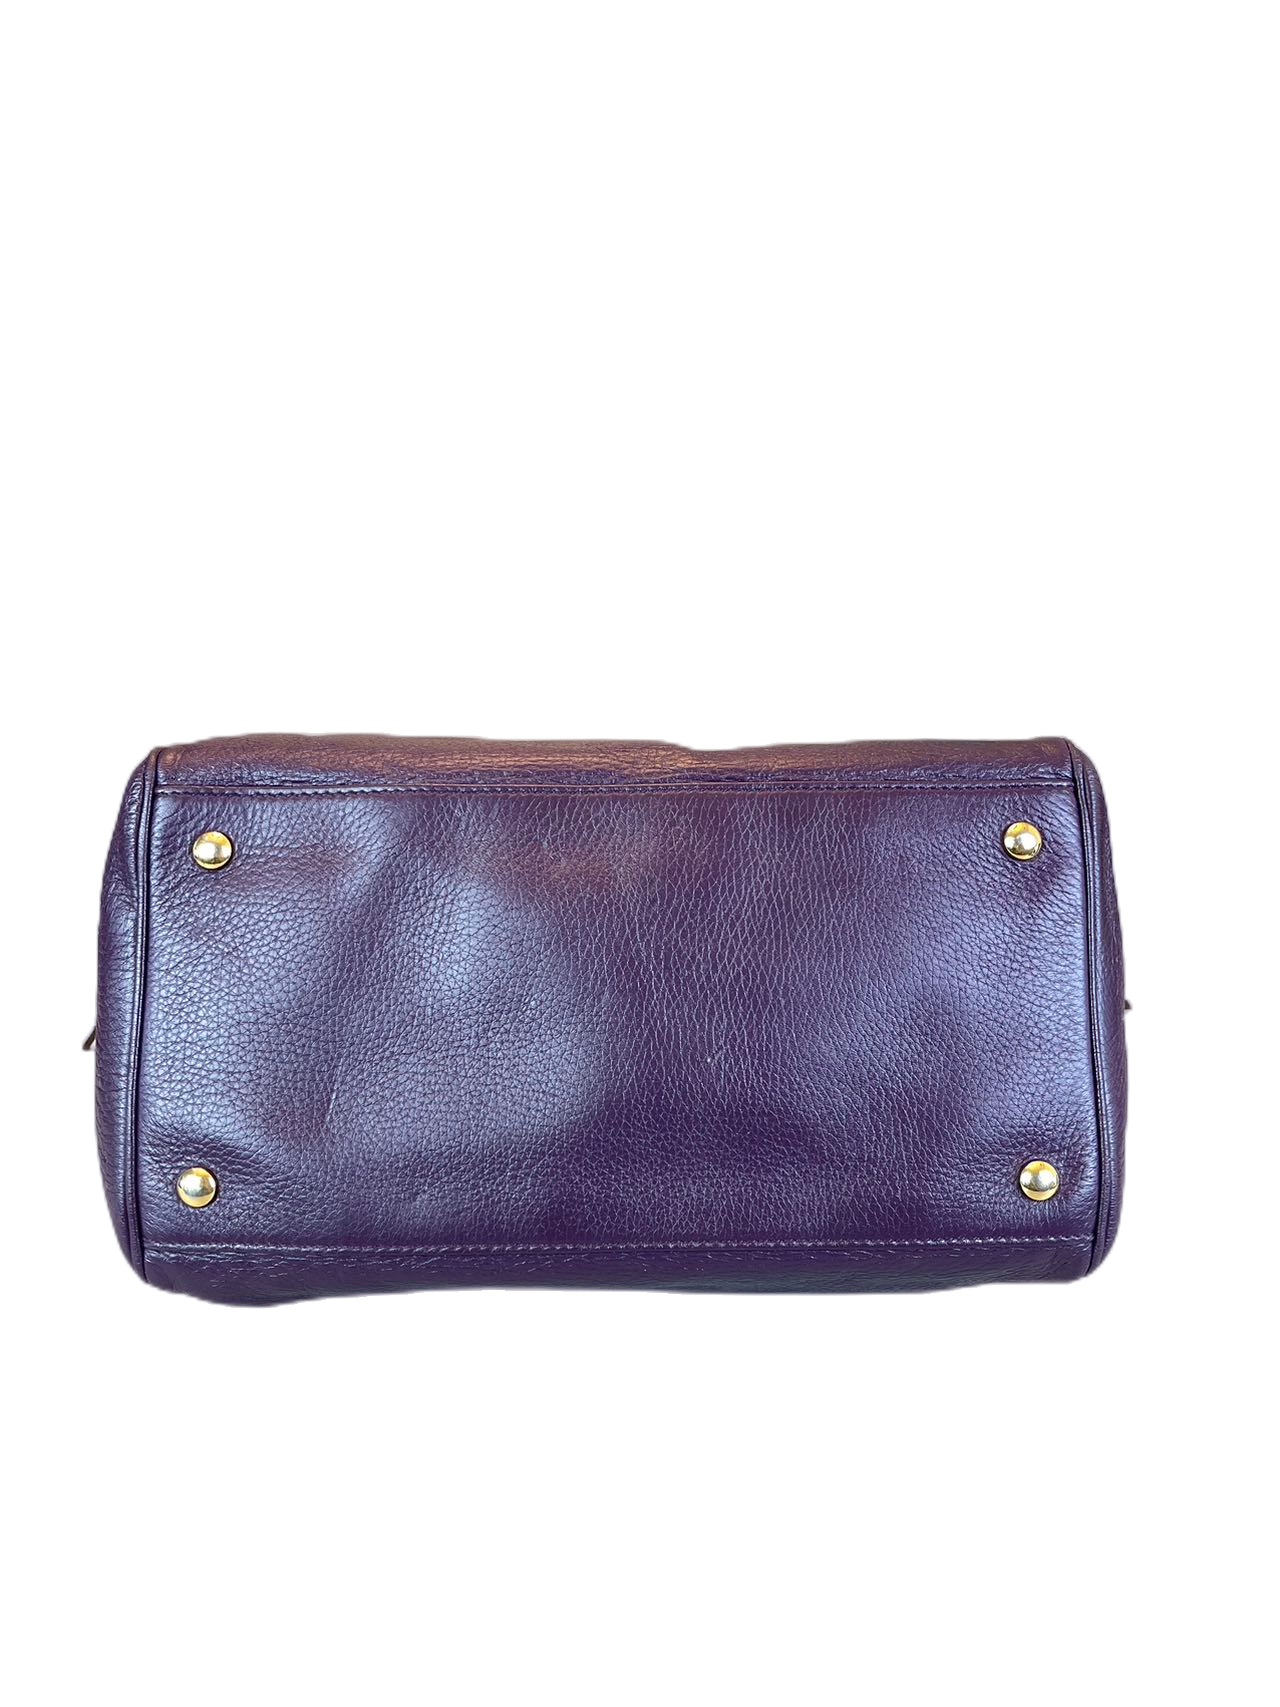 Versace Purple Leather Boston Bag Satchel Handbag